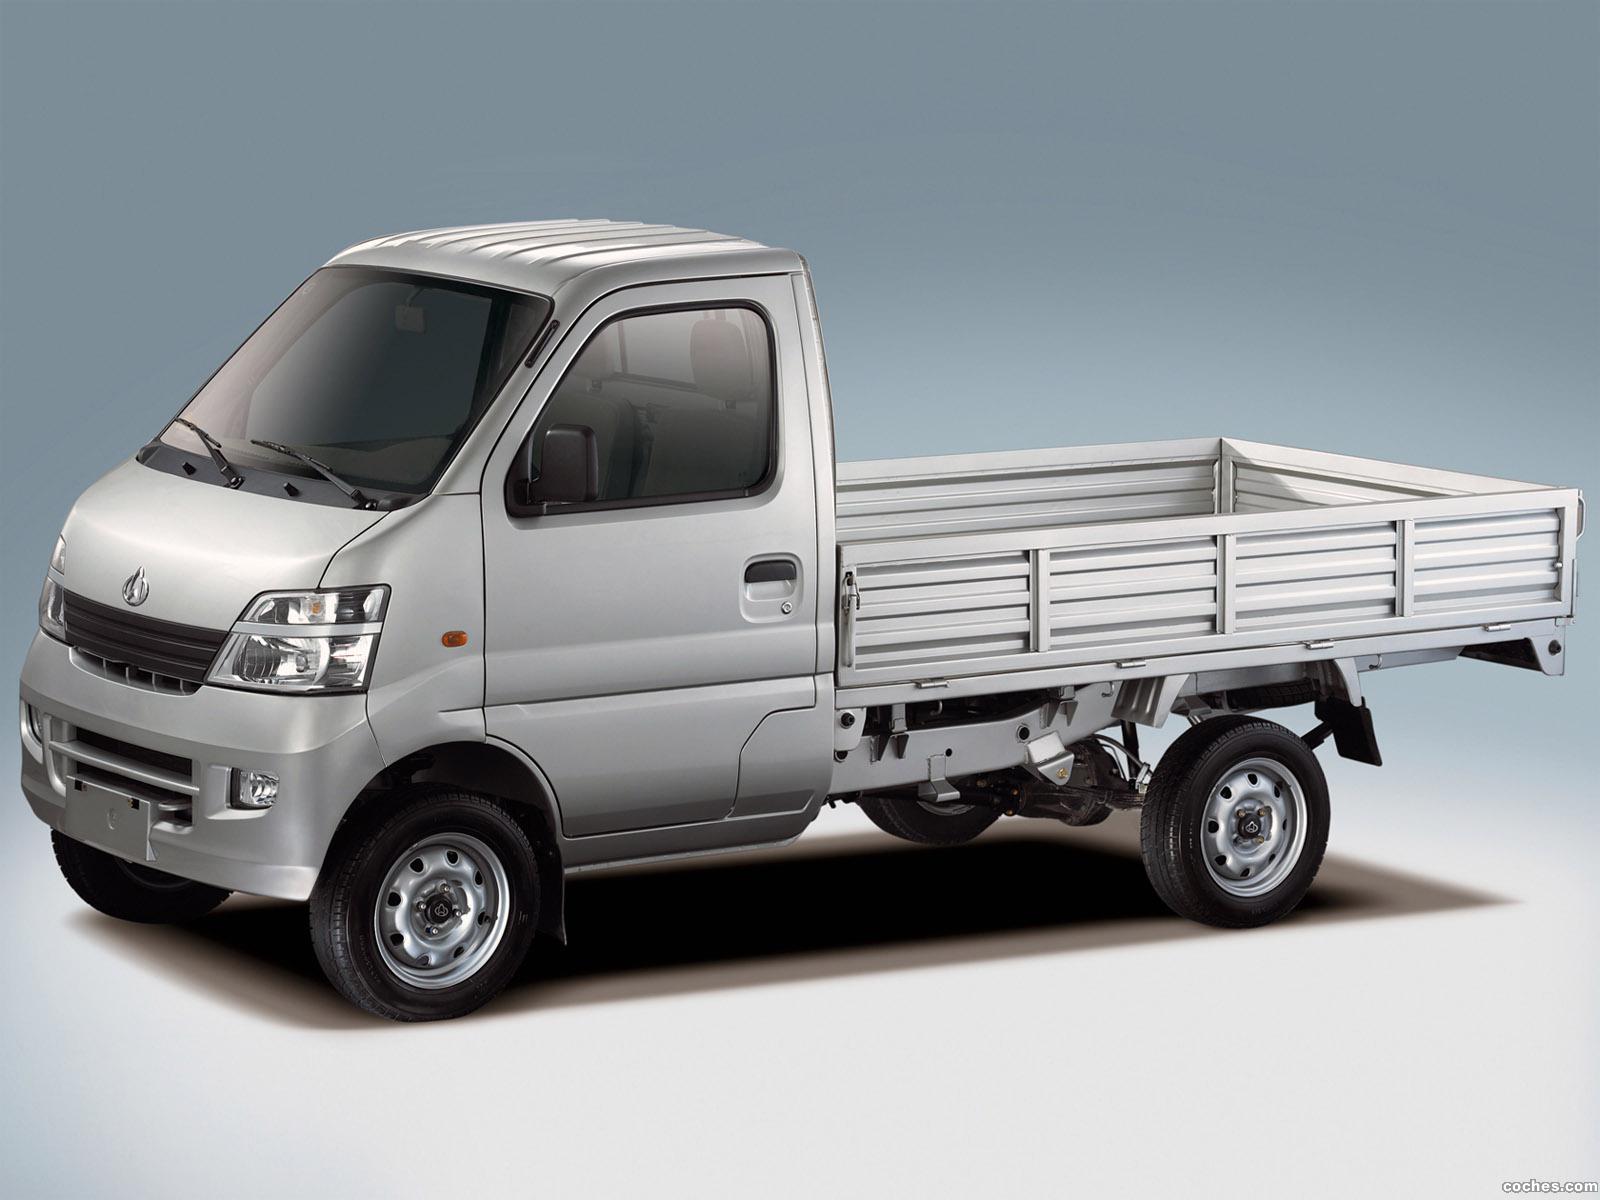 Микро грузовики. JAC минигрузовик. Мини грузовой Джак Джак. Chana Changan Star Mini van. Мини грузовик Джак 1.5т.